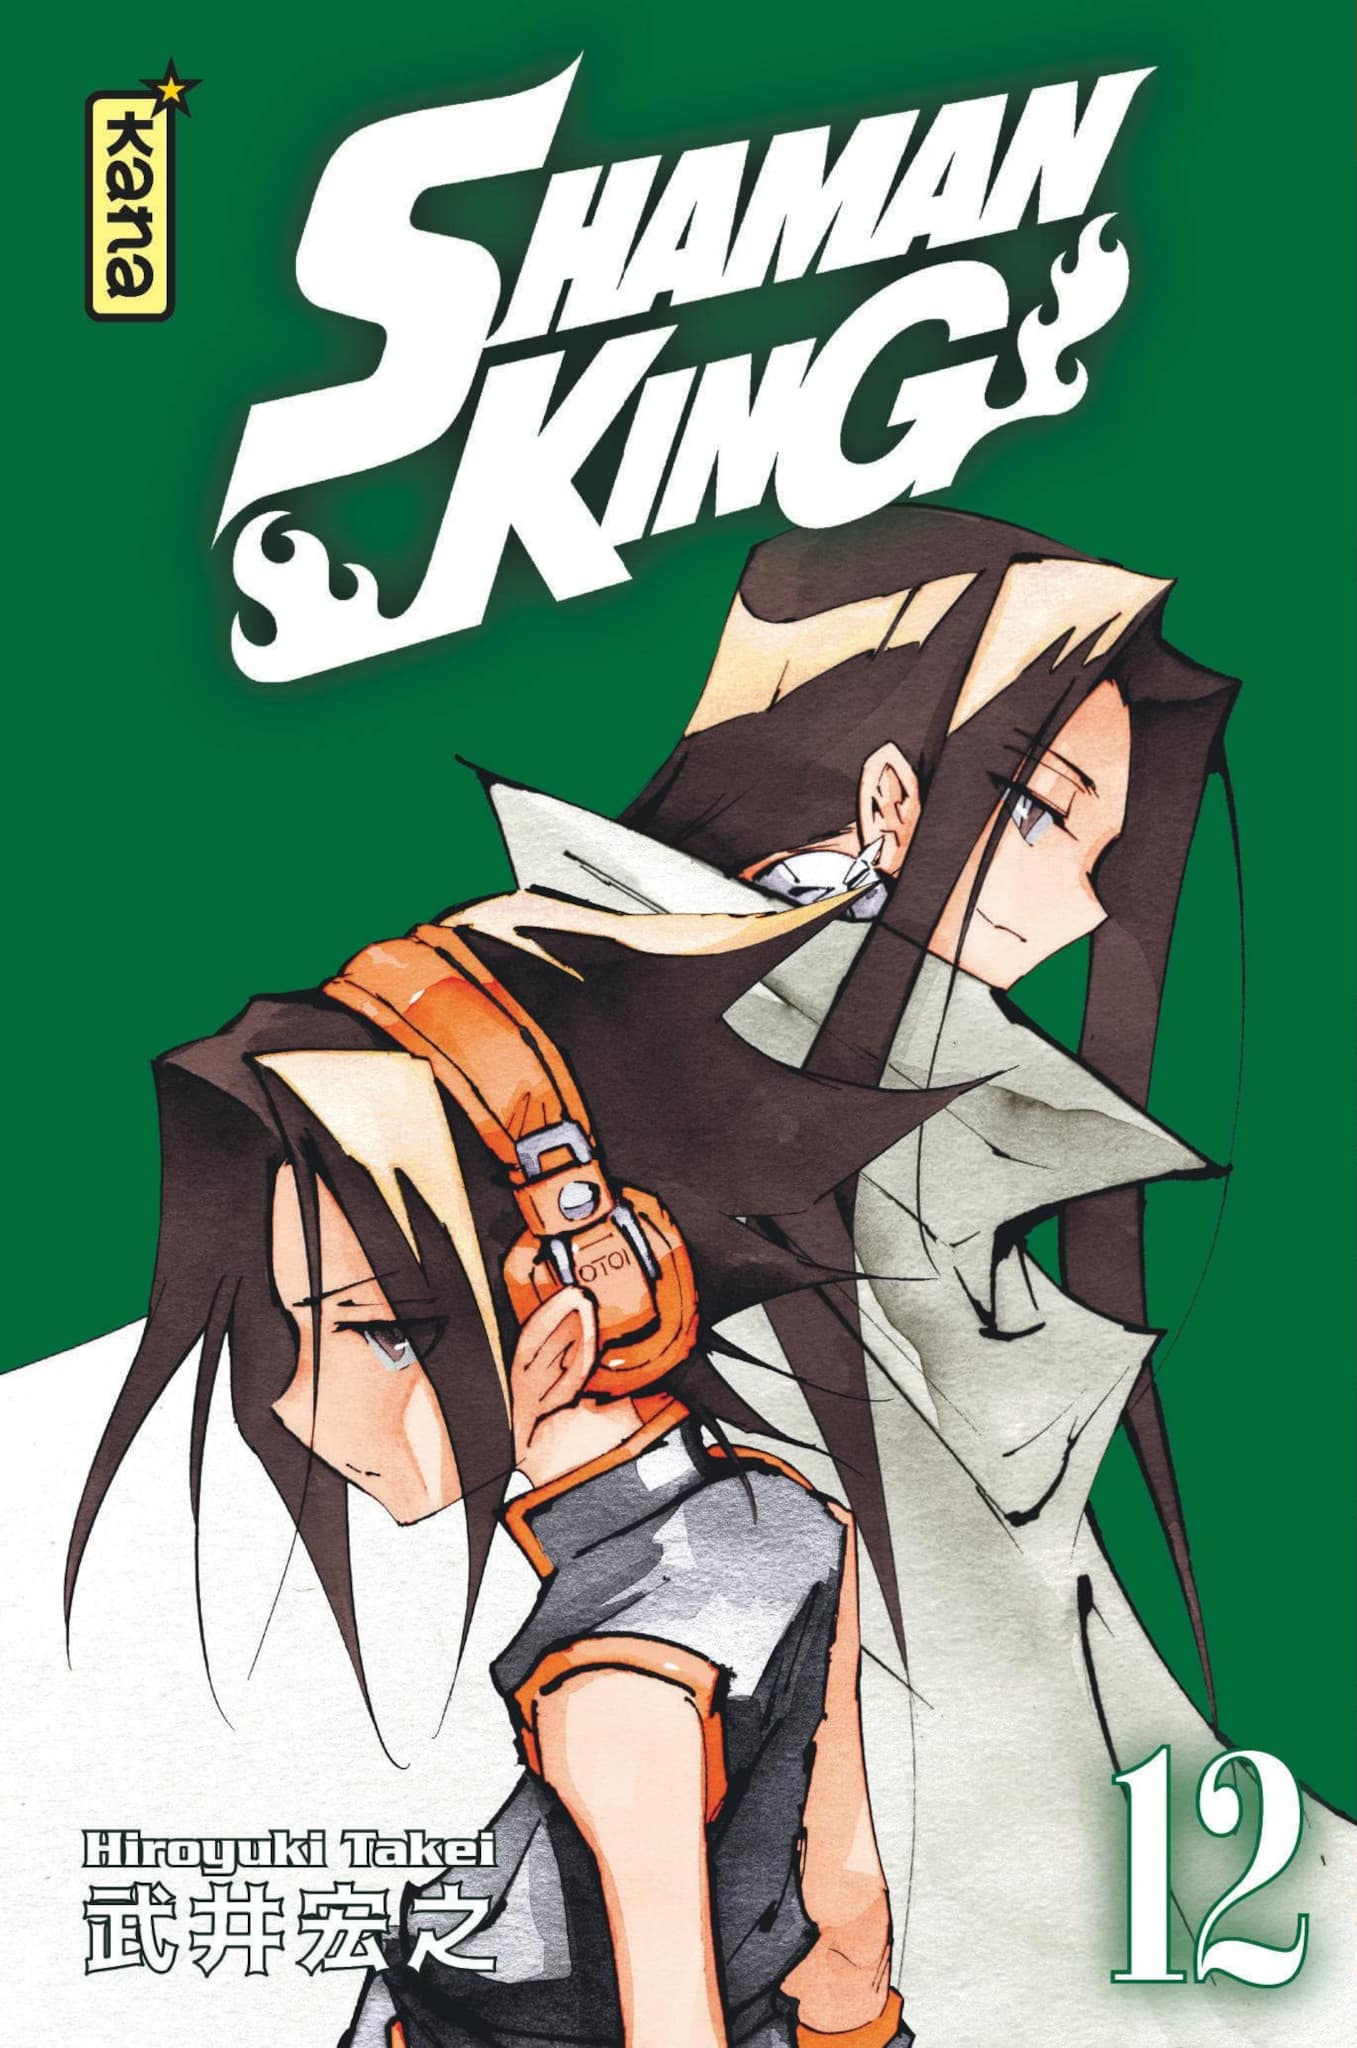 Tome 12 du manga Shaman King